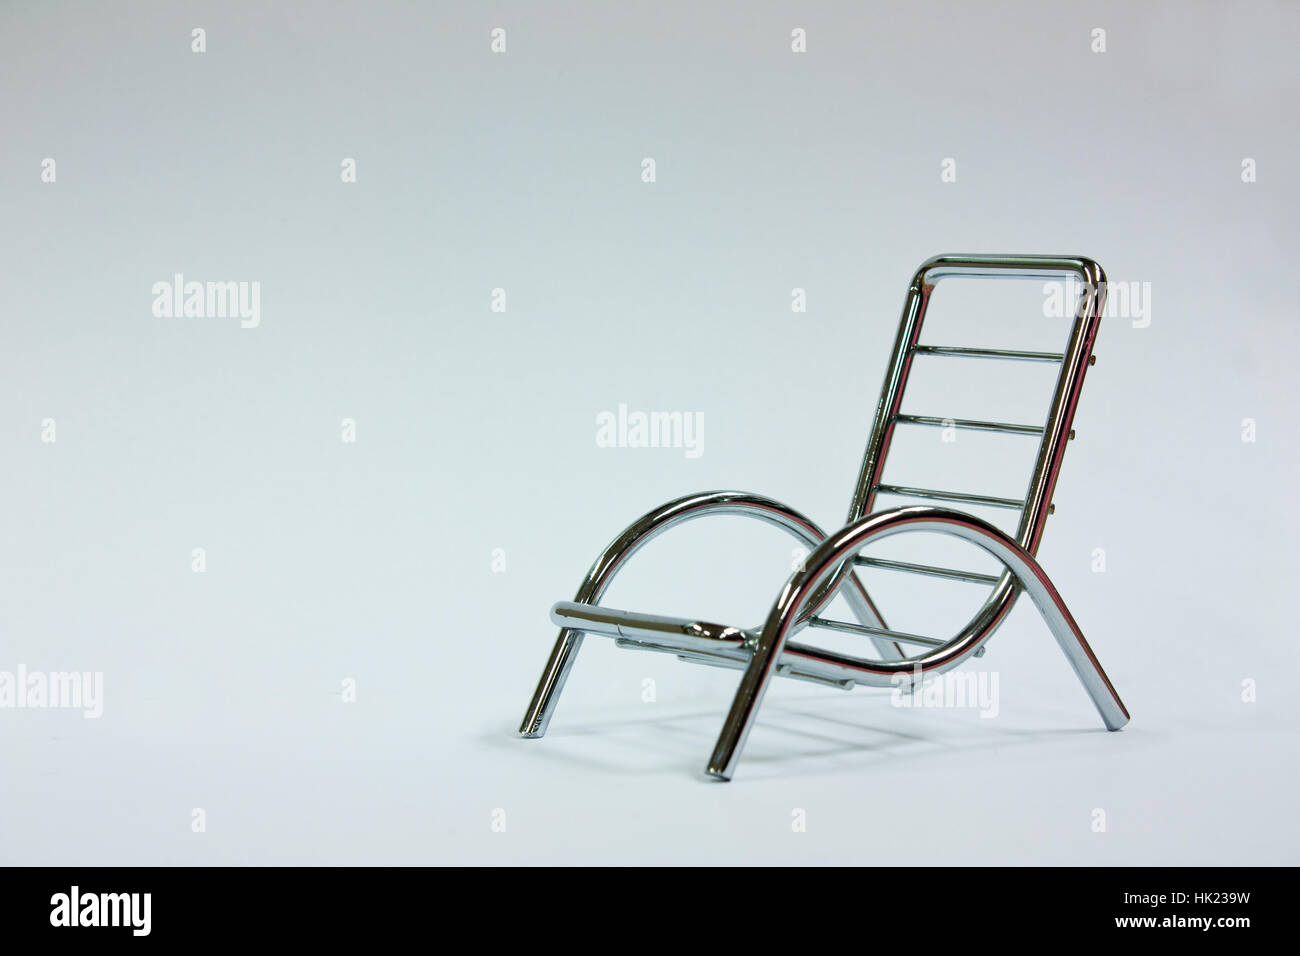 Single Metal Chair On White Background Stock Photo